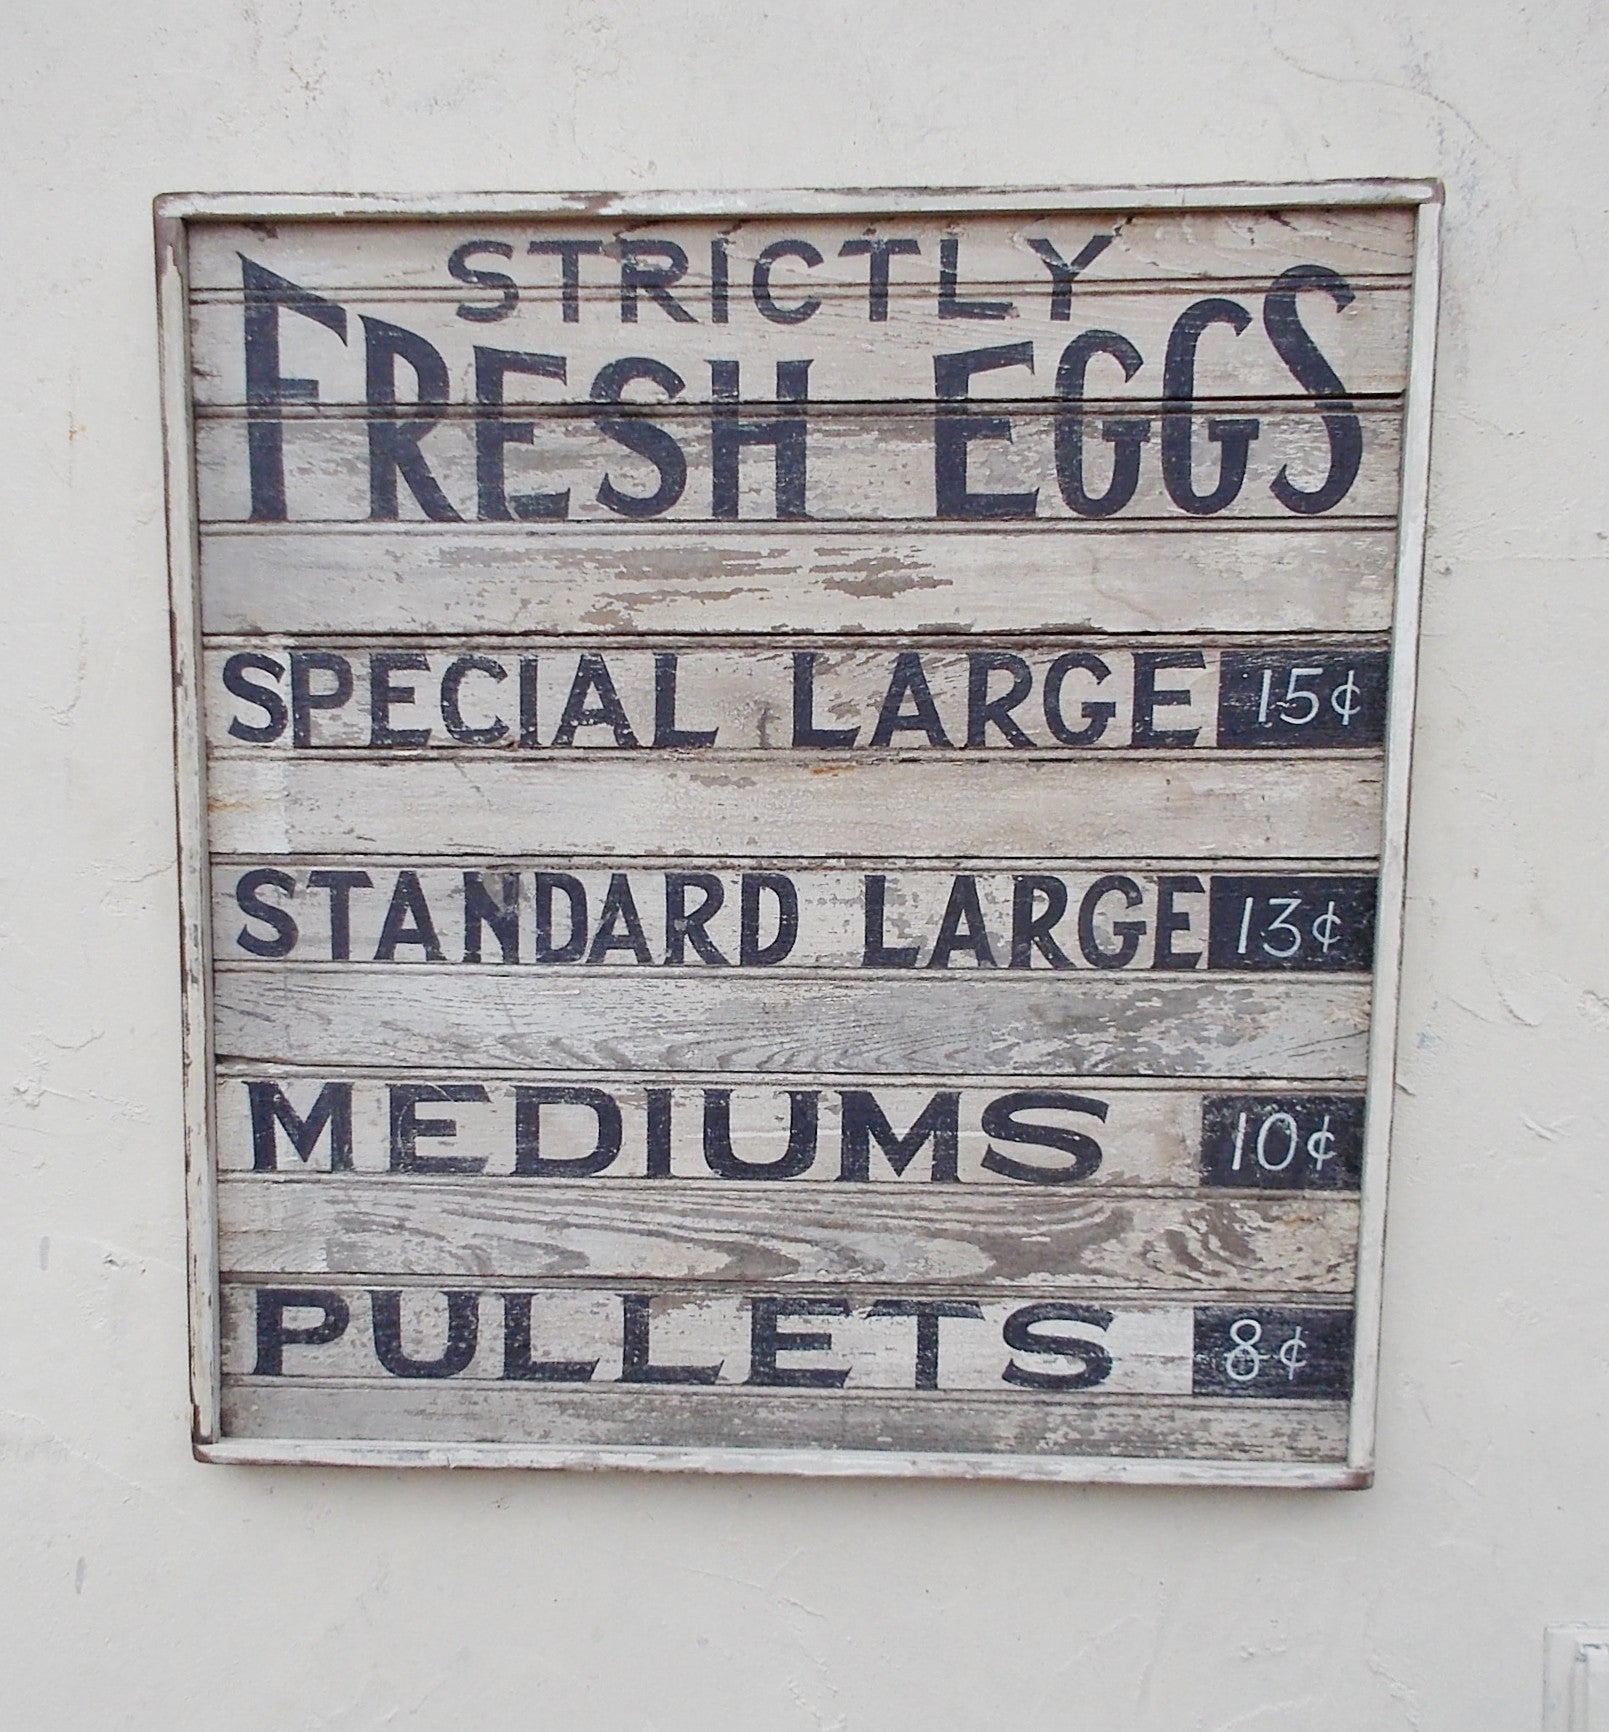 Strictly Fresh Eggs